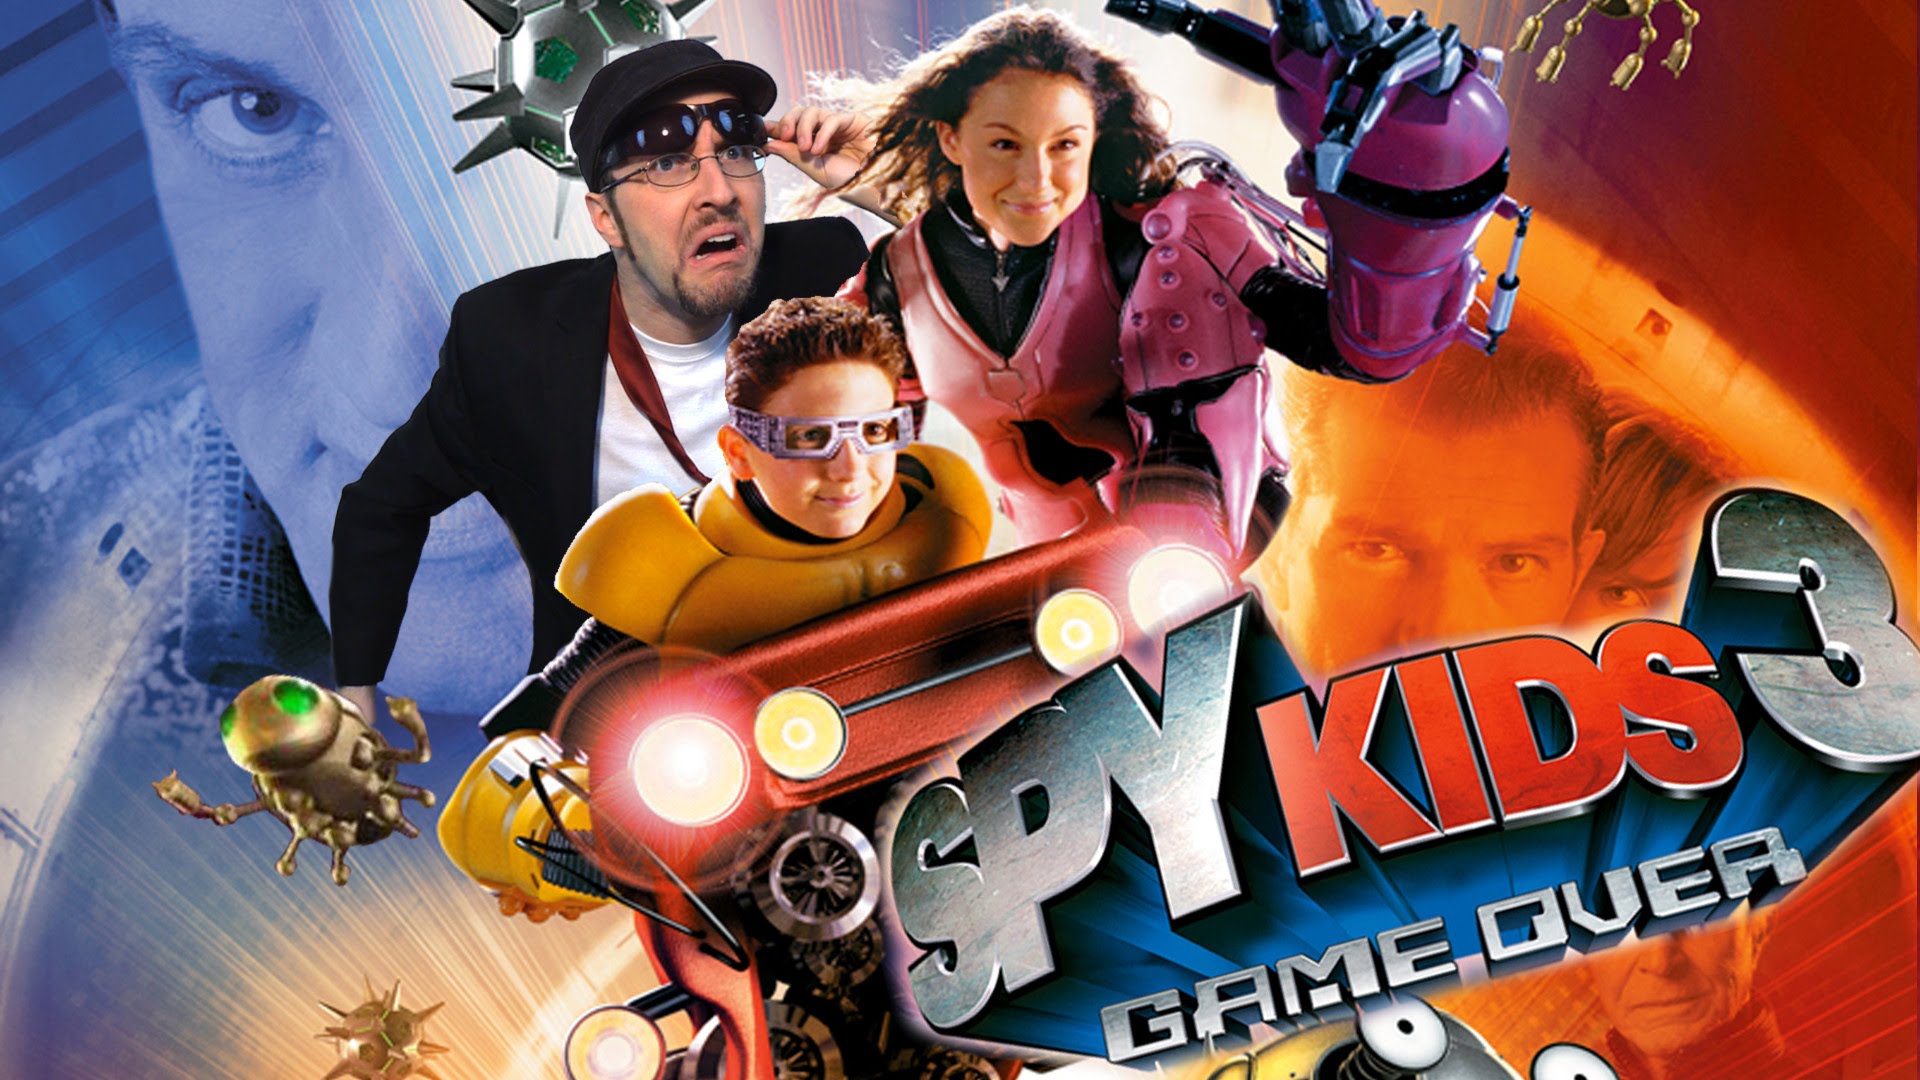 Spy Kids 3-D: Game Over Backgrounds on Wallpapers Vista